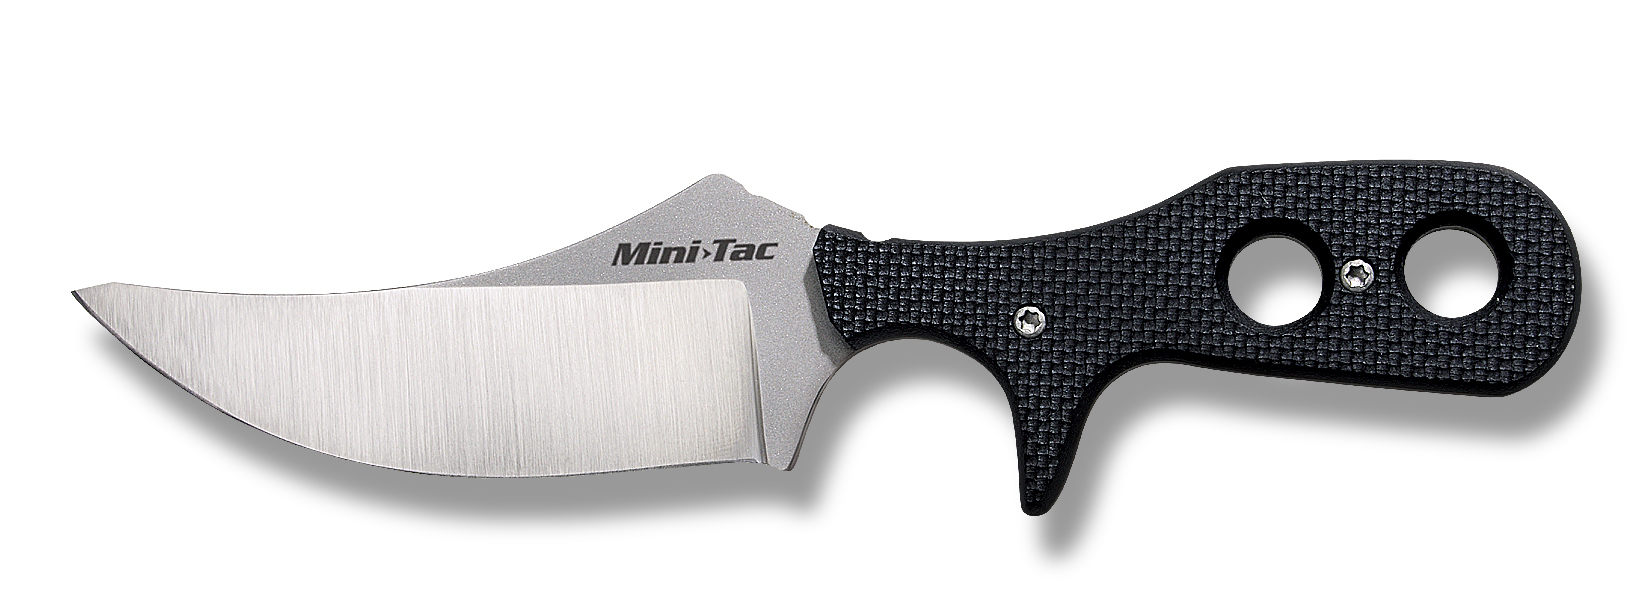 Нож Cold Steel Mini Tac сталь AUS8A пластик - фото 1